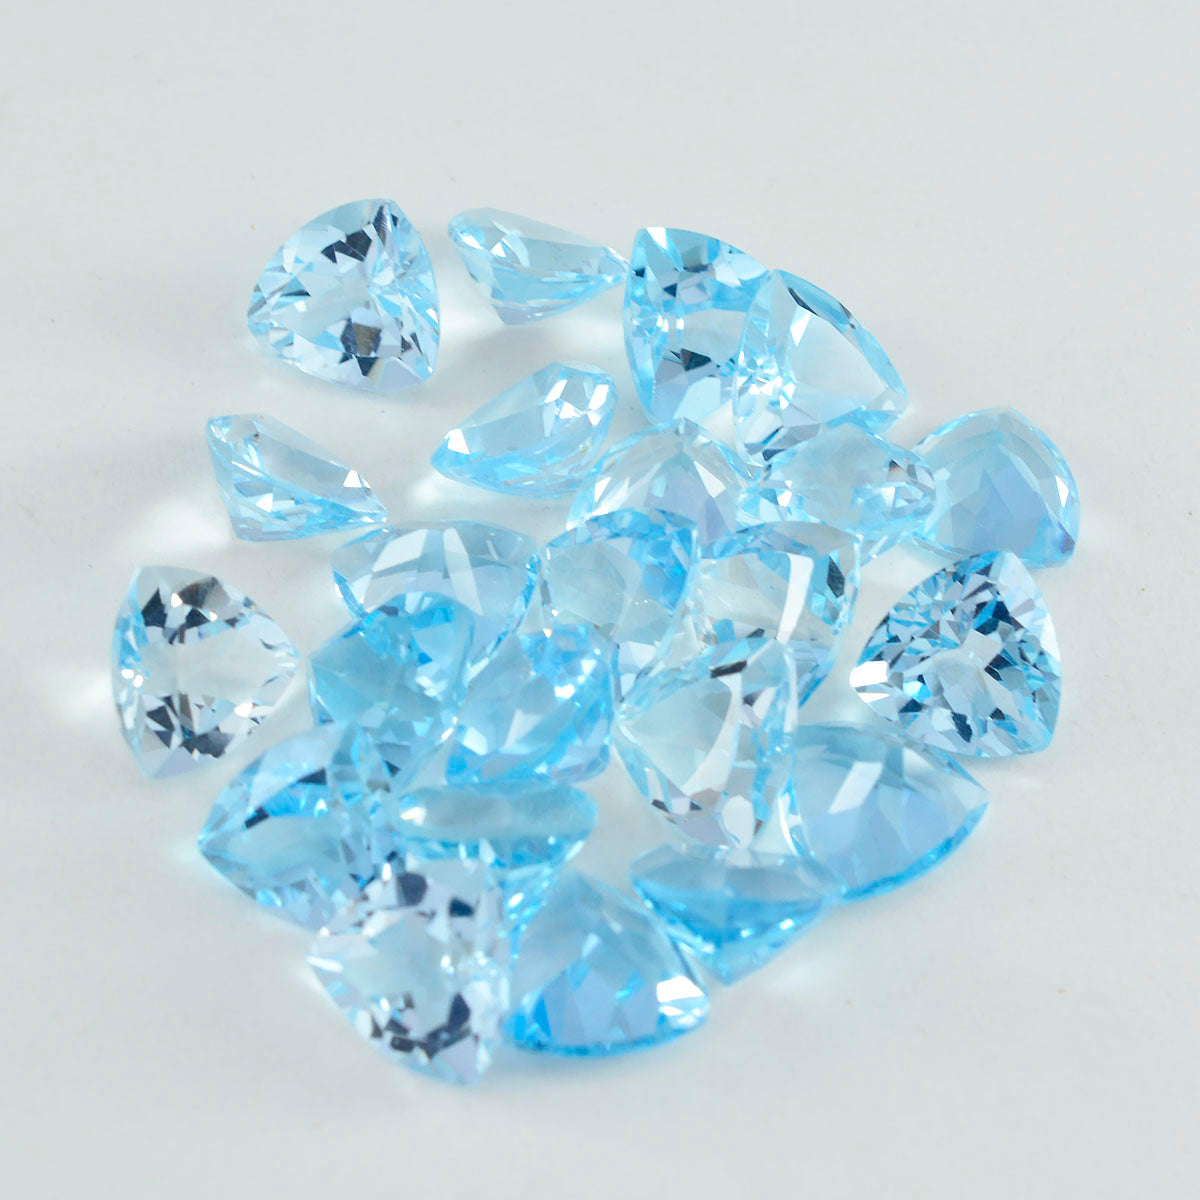 Riyogems 1PC Genuine Blue Topaz Faceted 6x6 mm Trillion Shape lovely Quality Loose Gem